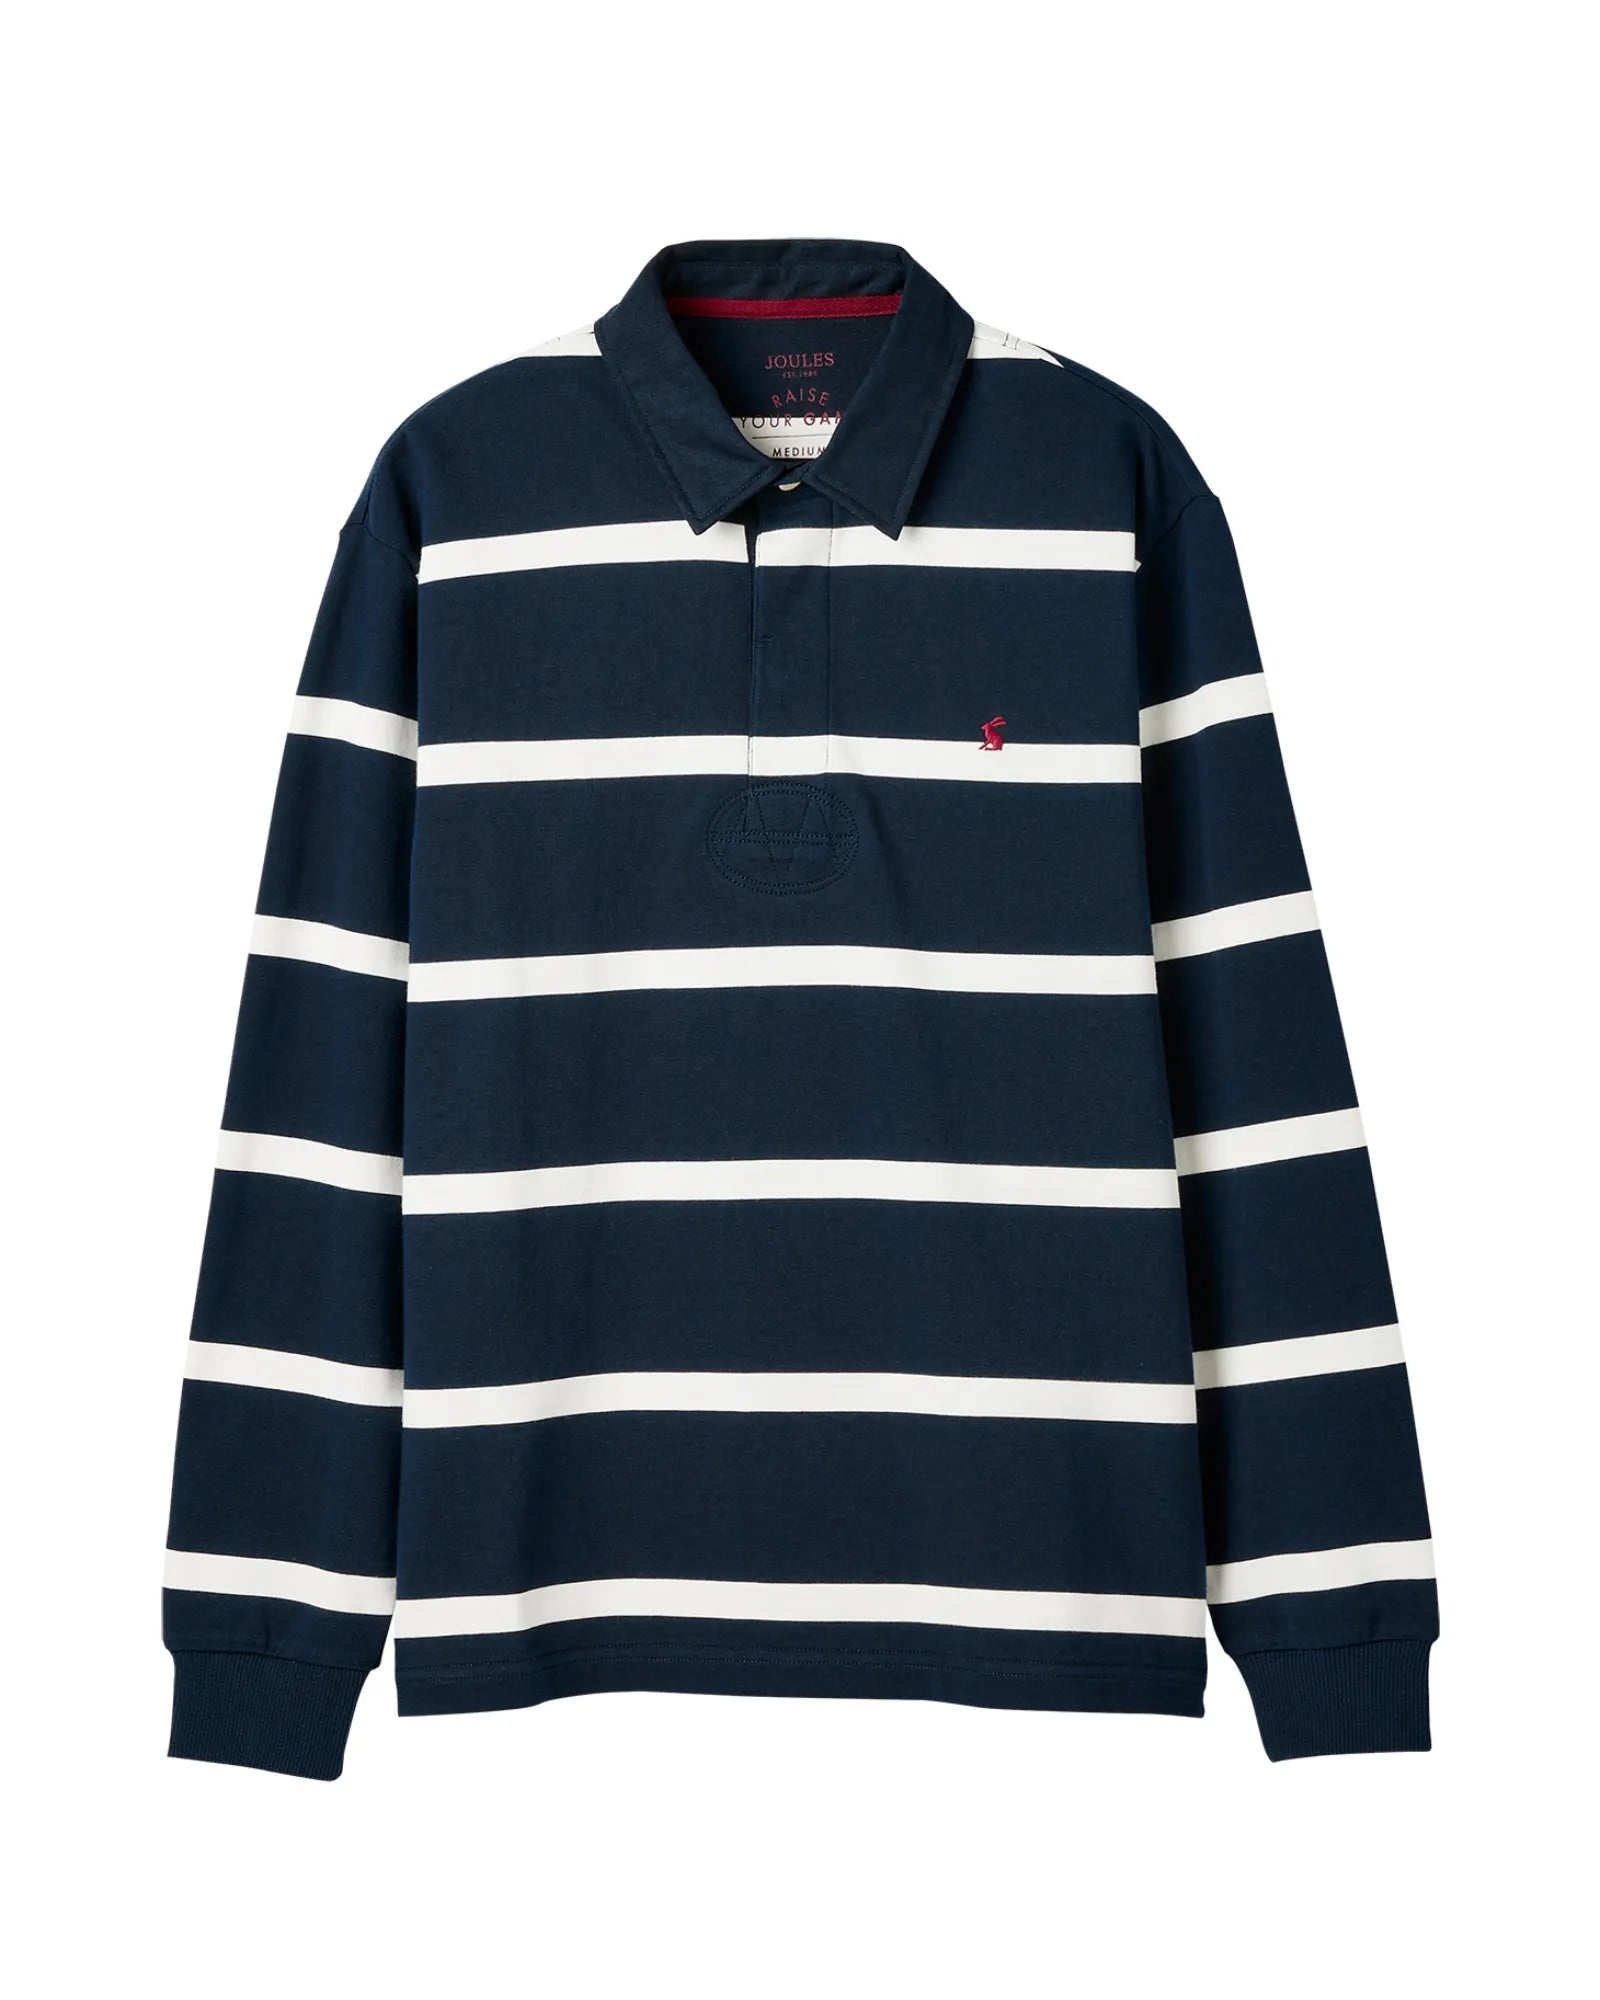 Onside Rugby Shirt - Navy Cream Stripe